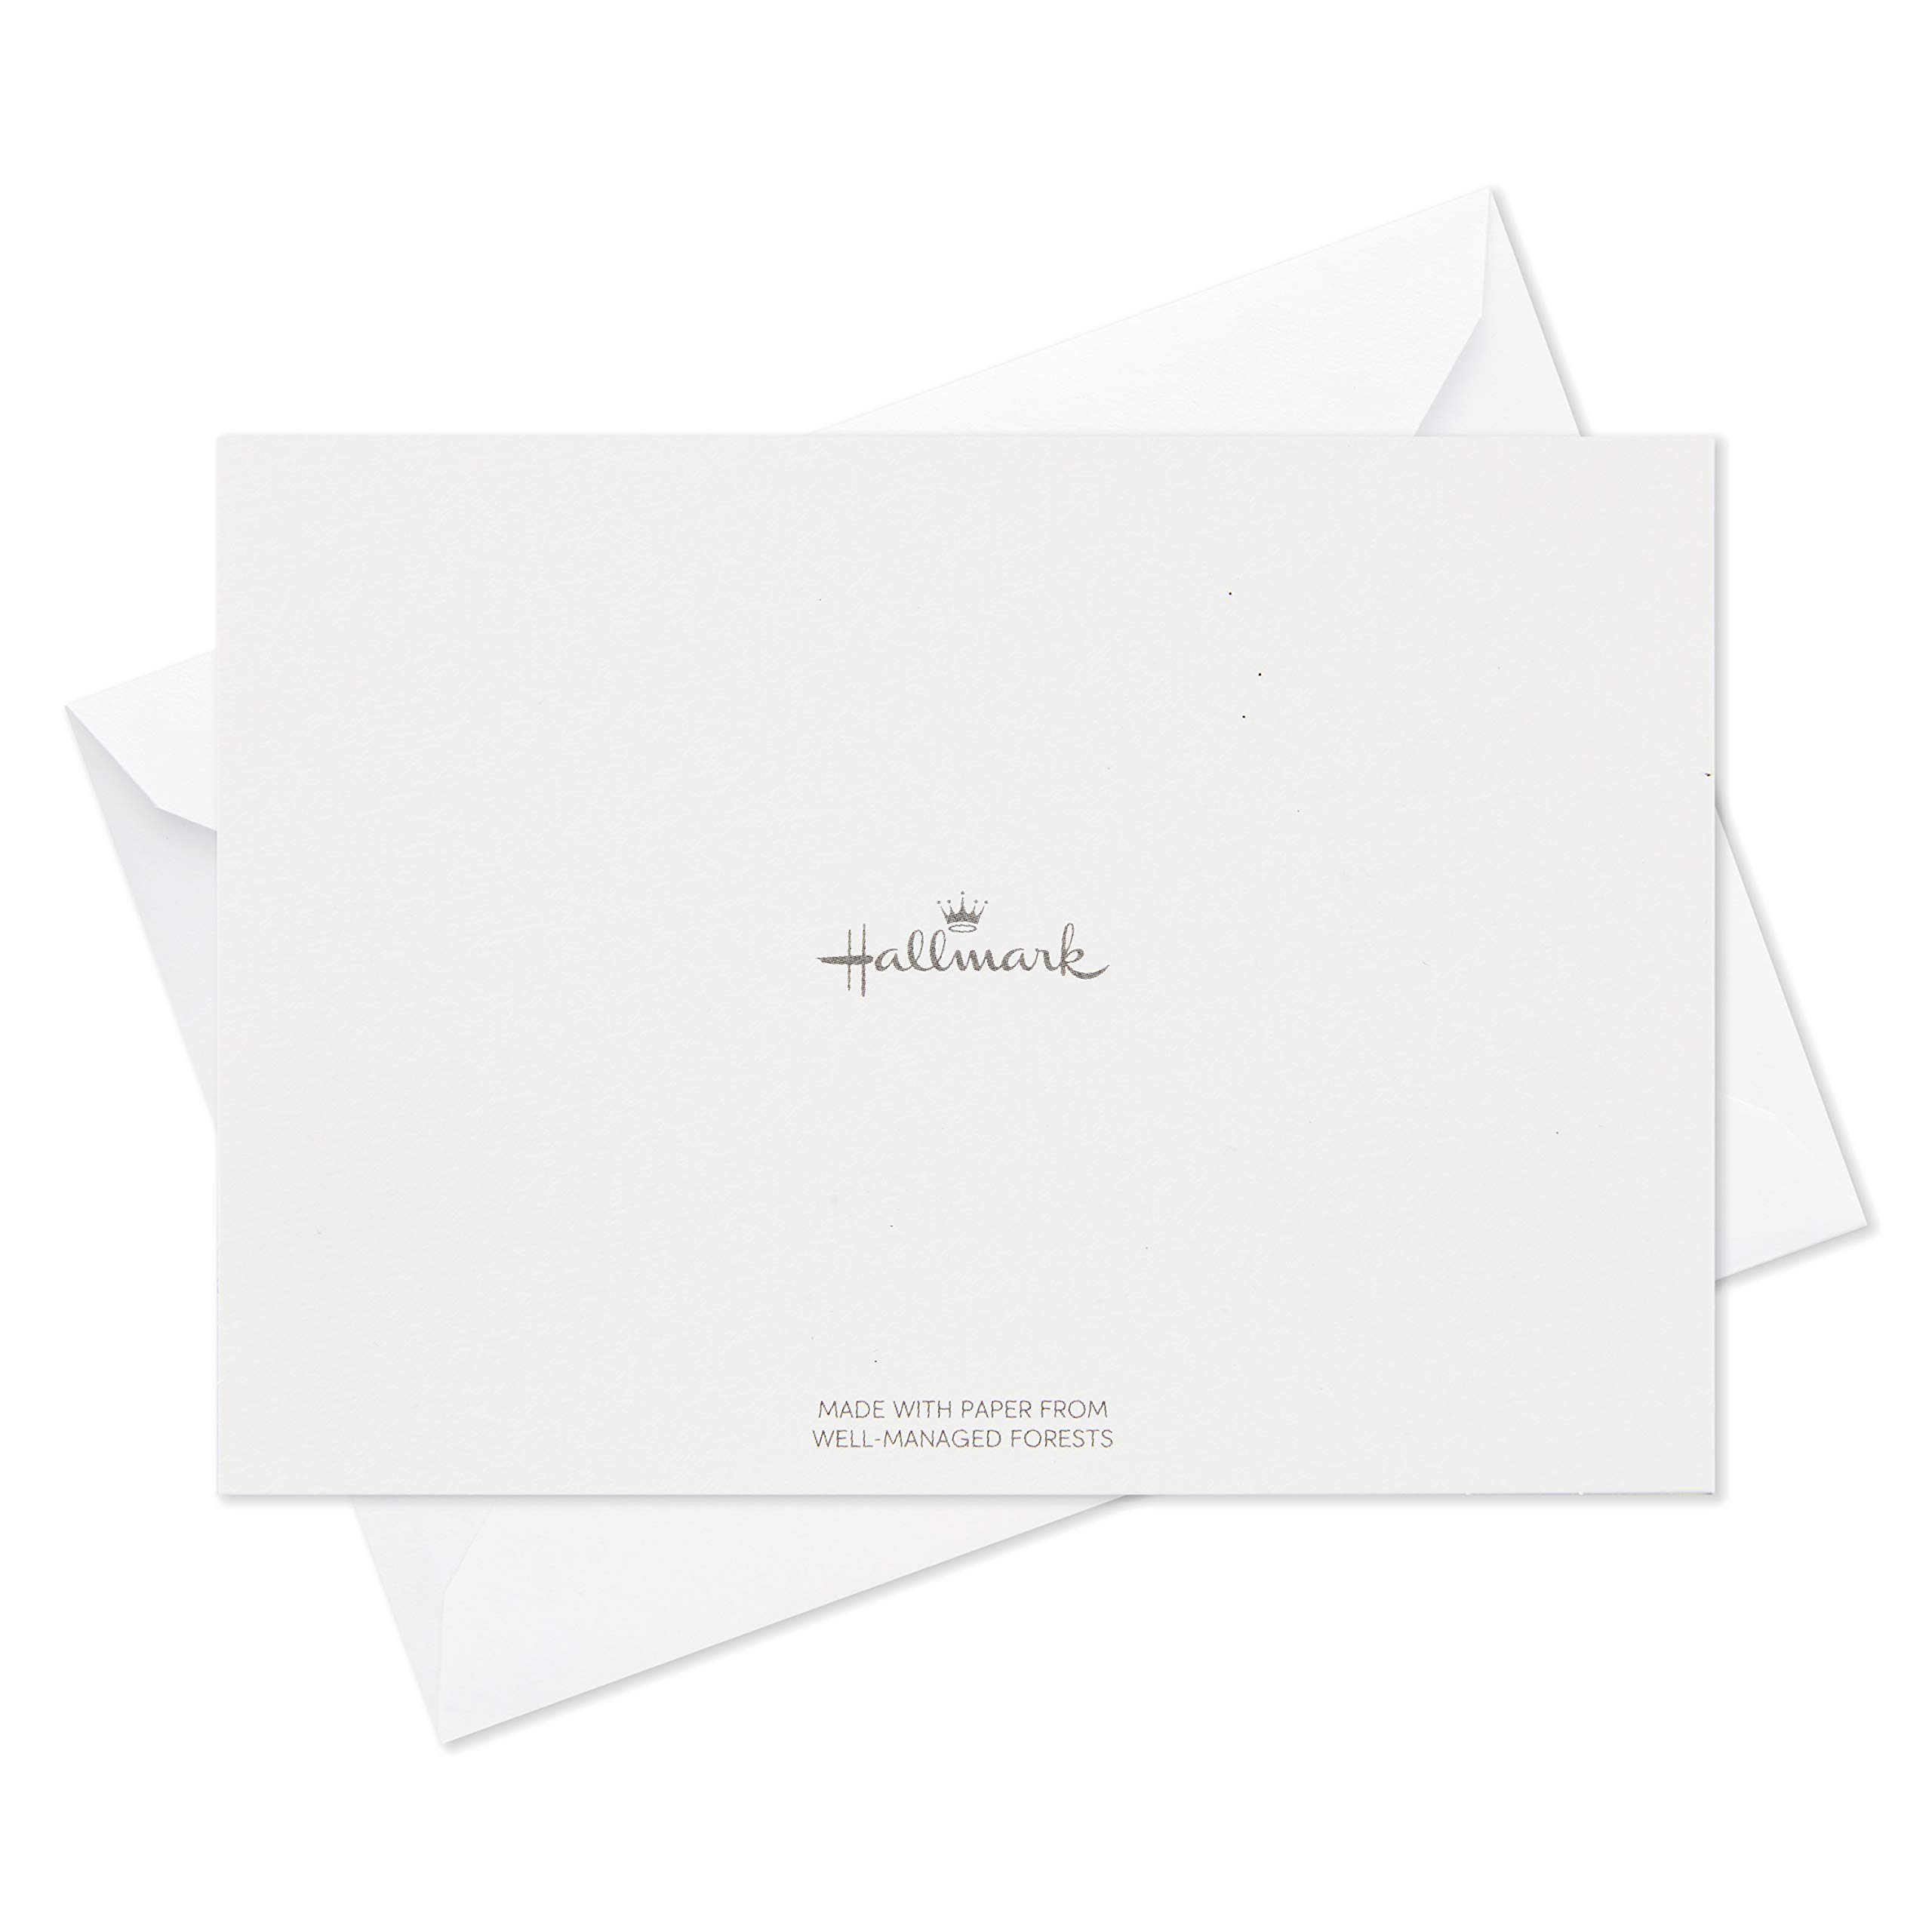 Hallmark Thank You Cards Assortment, Tropical Animals (24 Assorted Thank You Notes with Envelopes—Cheetahs, Llamas, Zebras, Flamingos, Birds)